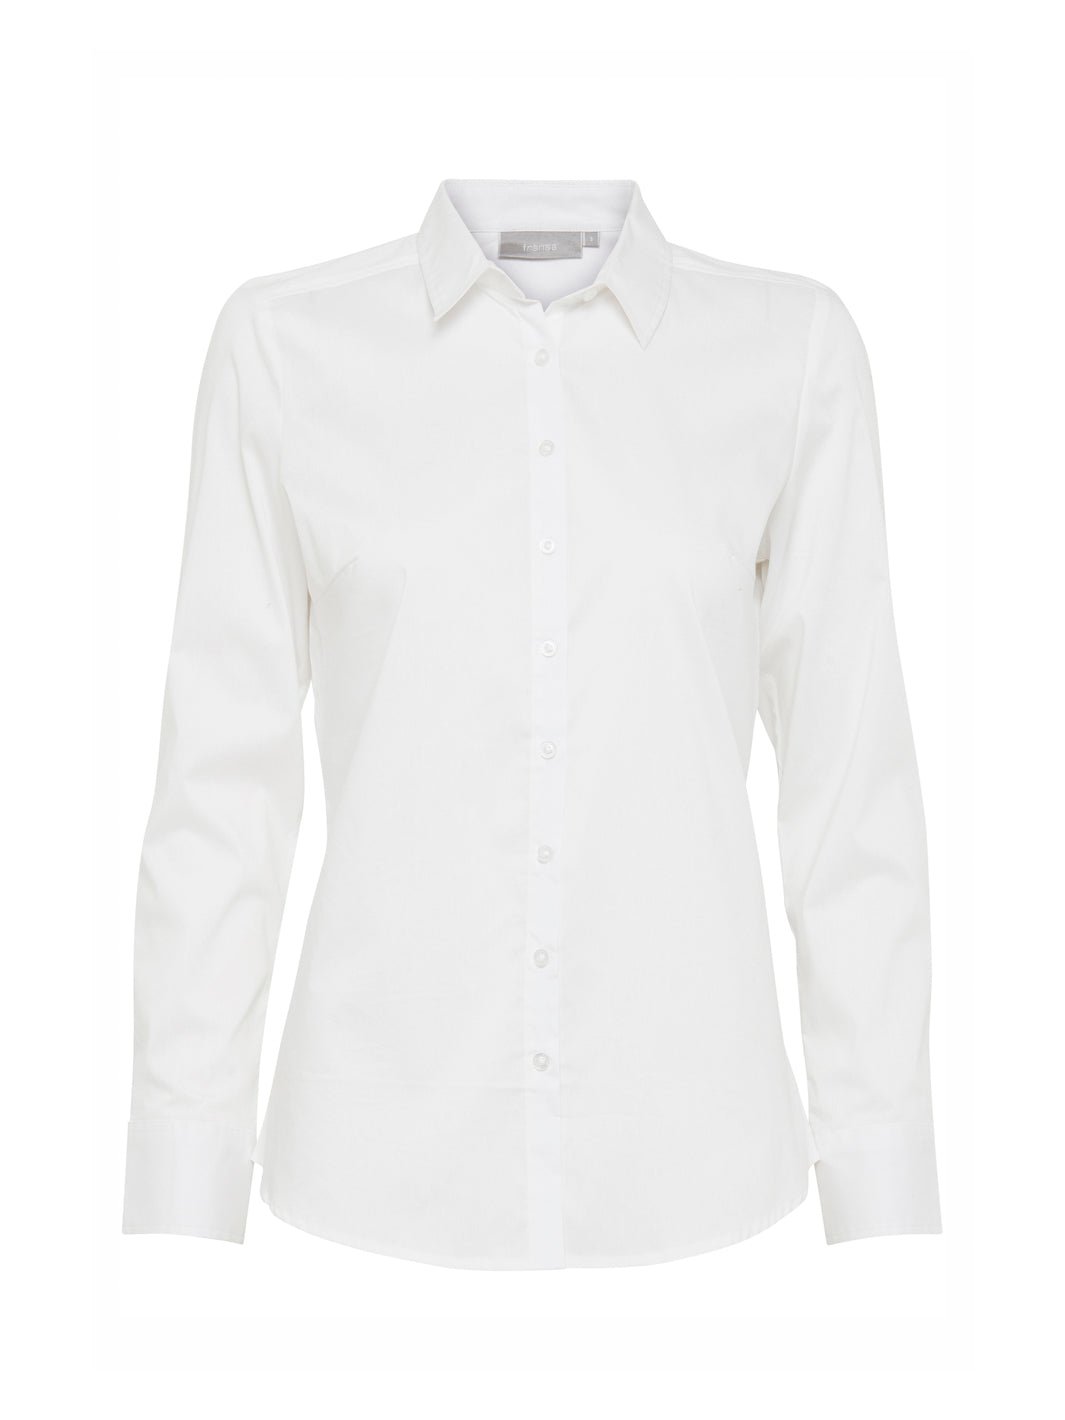 Fransa Zashirt shirt white - Online-Mode